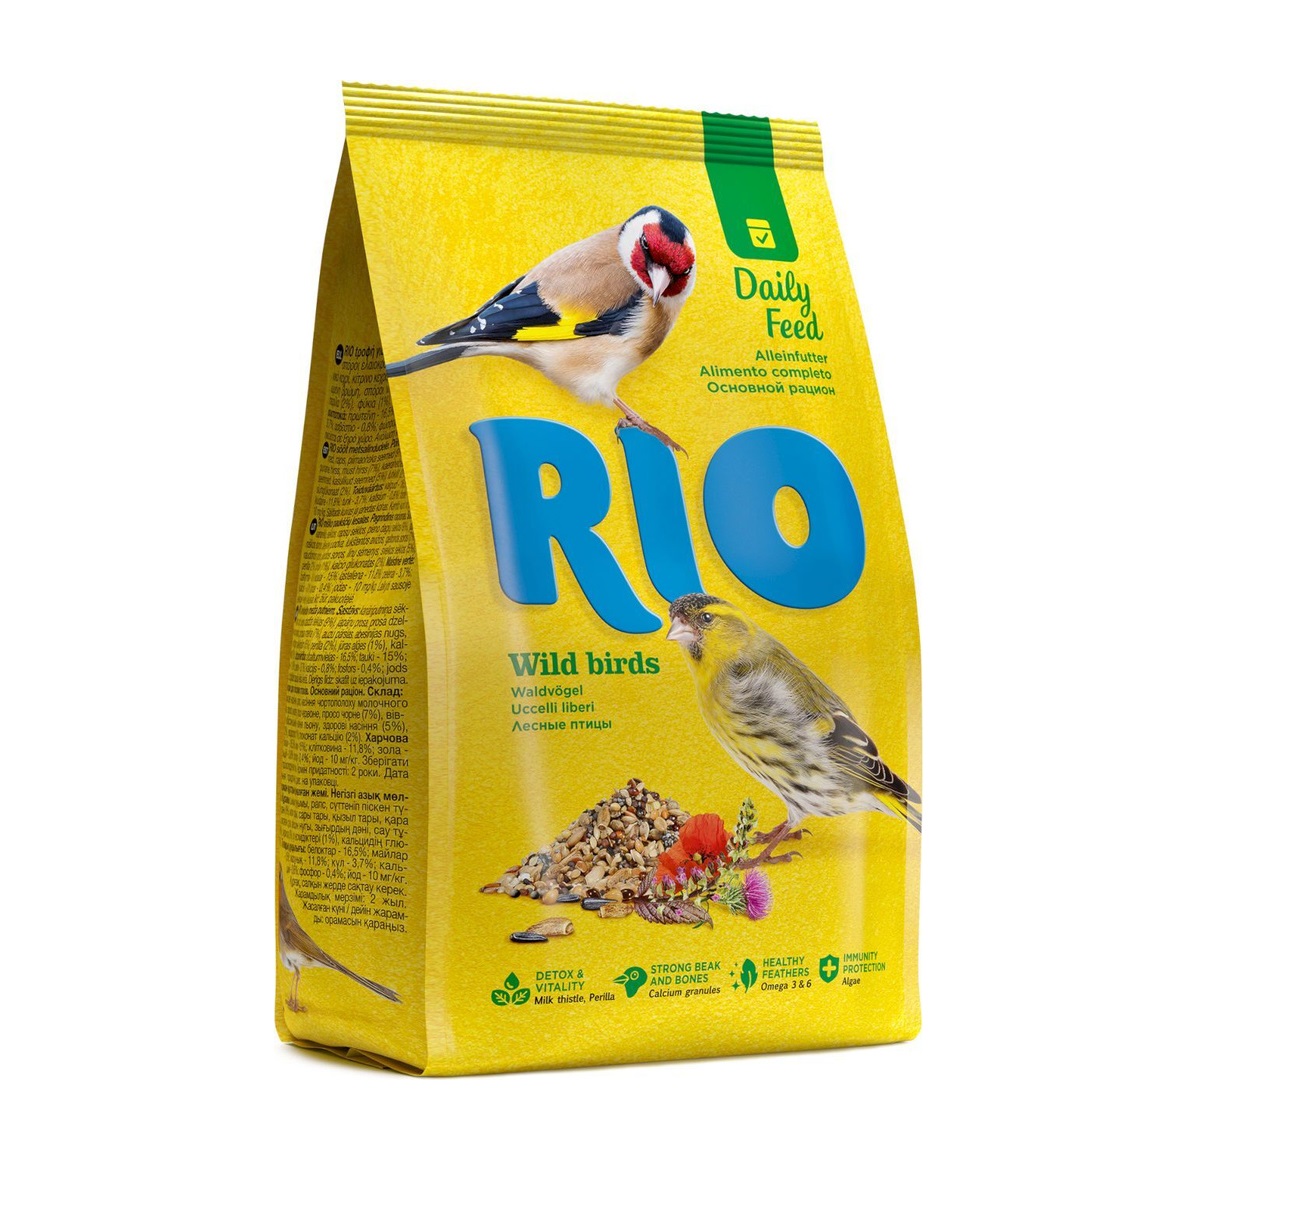 Рио 500гр - для лесных певчих птиц (Rio)